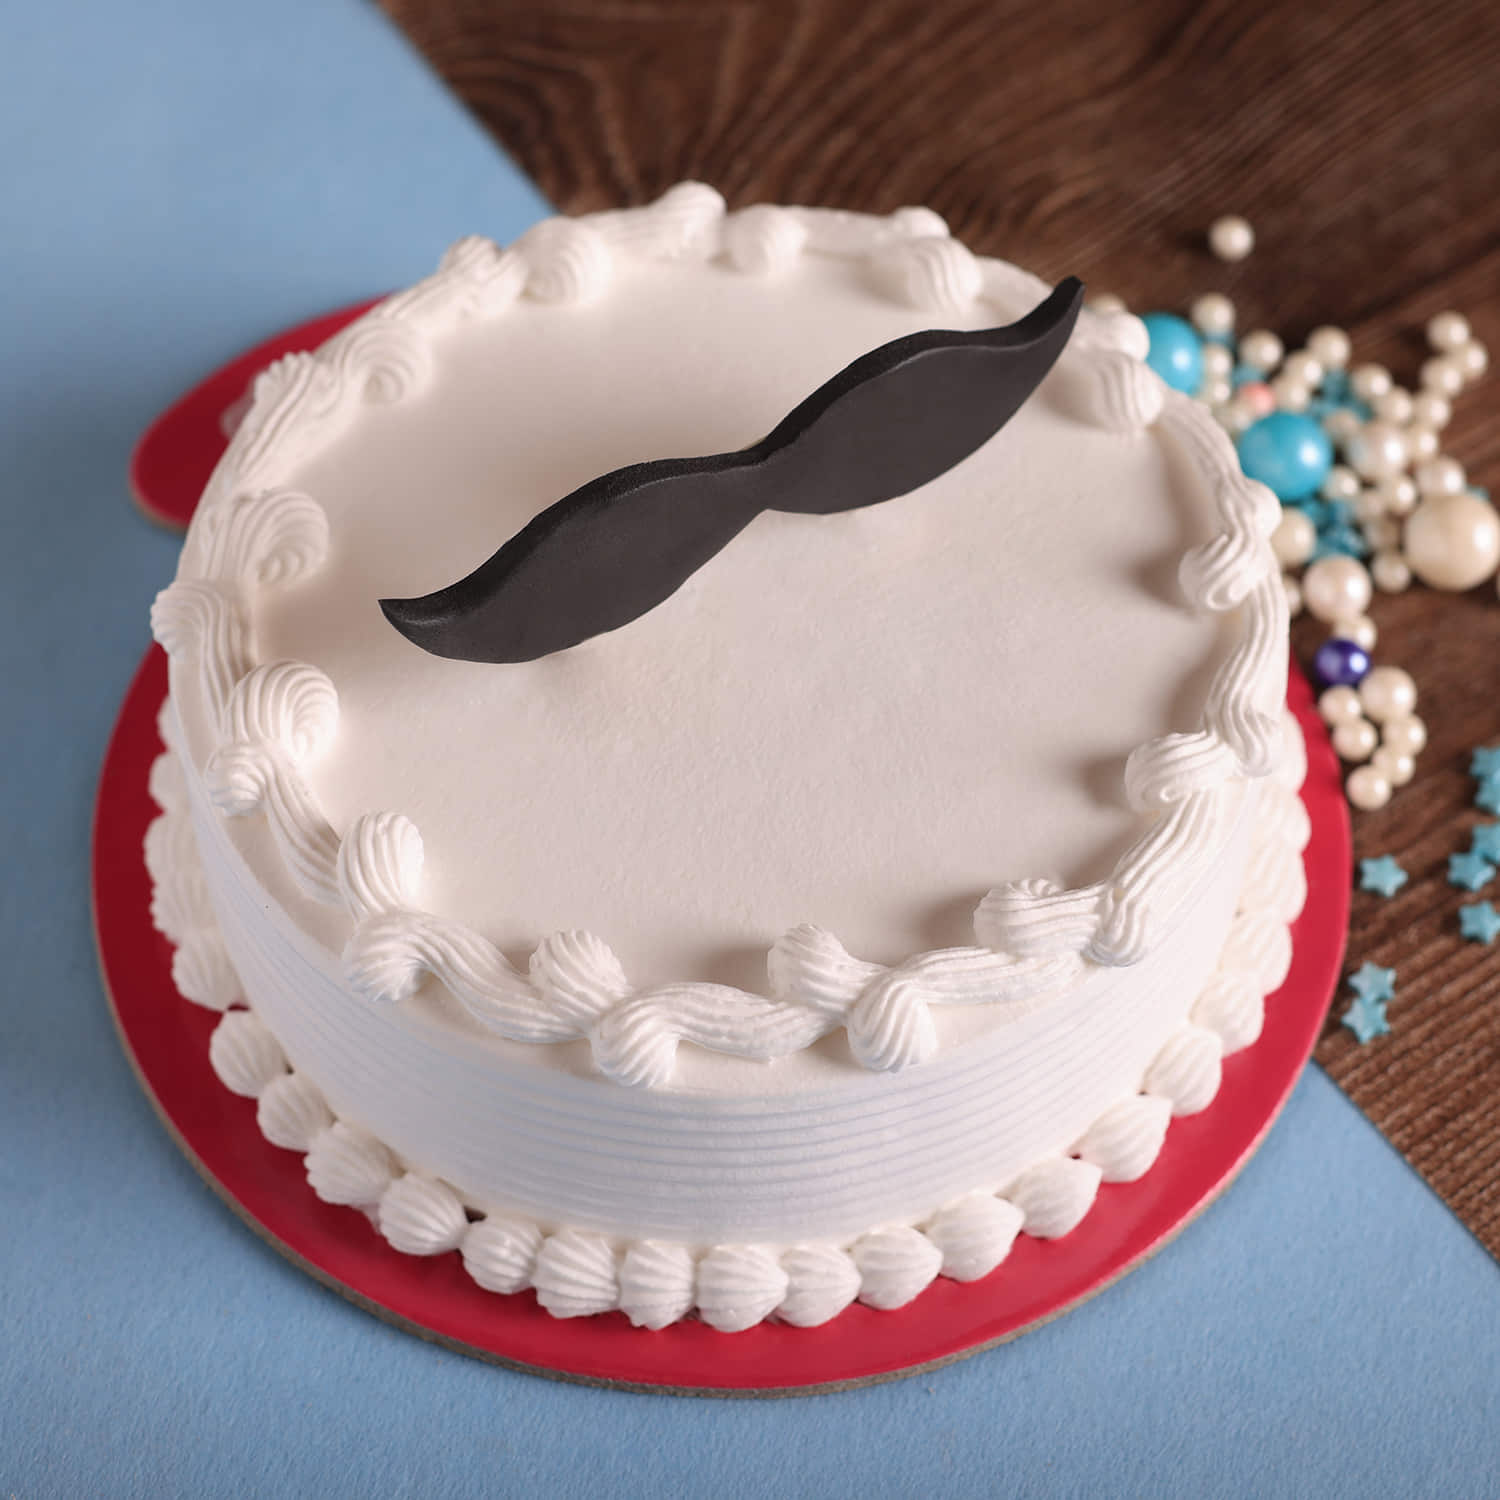 Swirl n Yum - Moustache birthday cake ...! . . .#moustachecake  #gentlemencake #cake#cakes#moustache#icing#bow#fondant#whippedcreamcake#swirlnyum#homebakery#baker#ranchibaker#cakeartist#ranchi#jharkhand#likeforlikes  #like4likes #followforfollowback ...